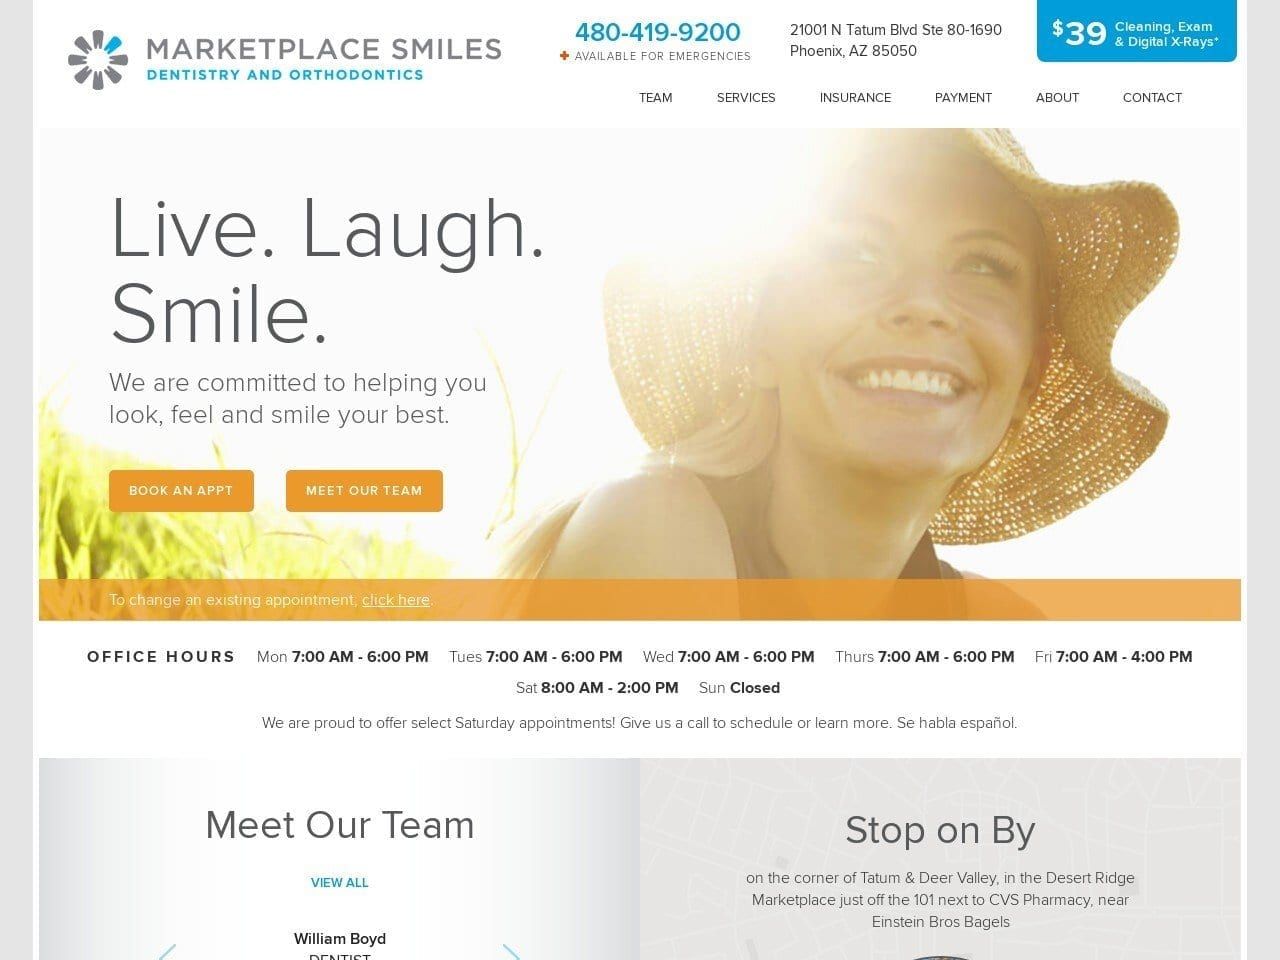 Marketplace Smiles Website Screenshot from marketplacesmiles.com